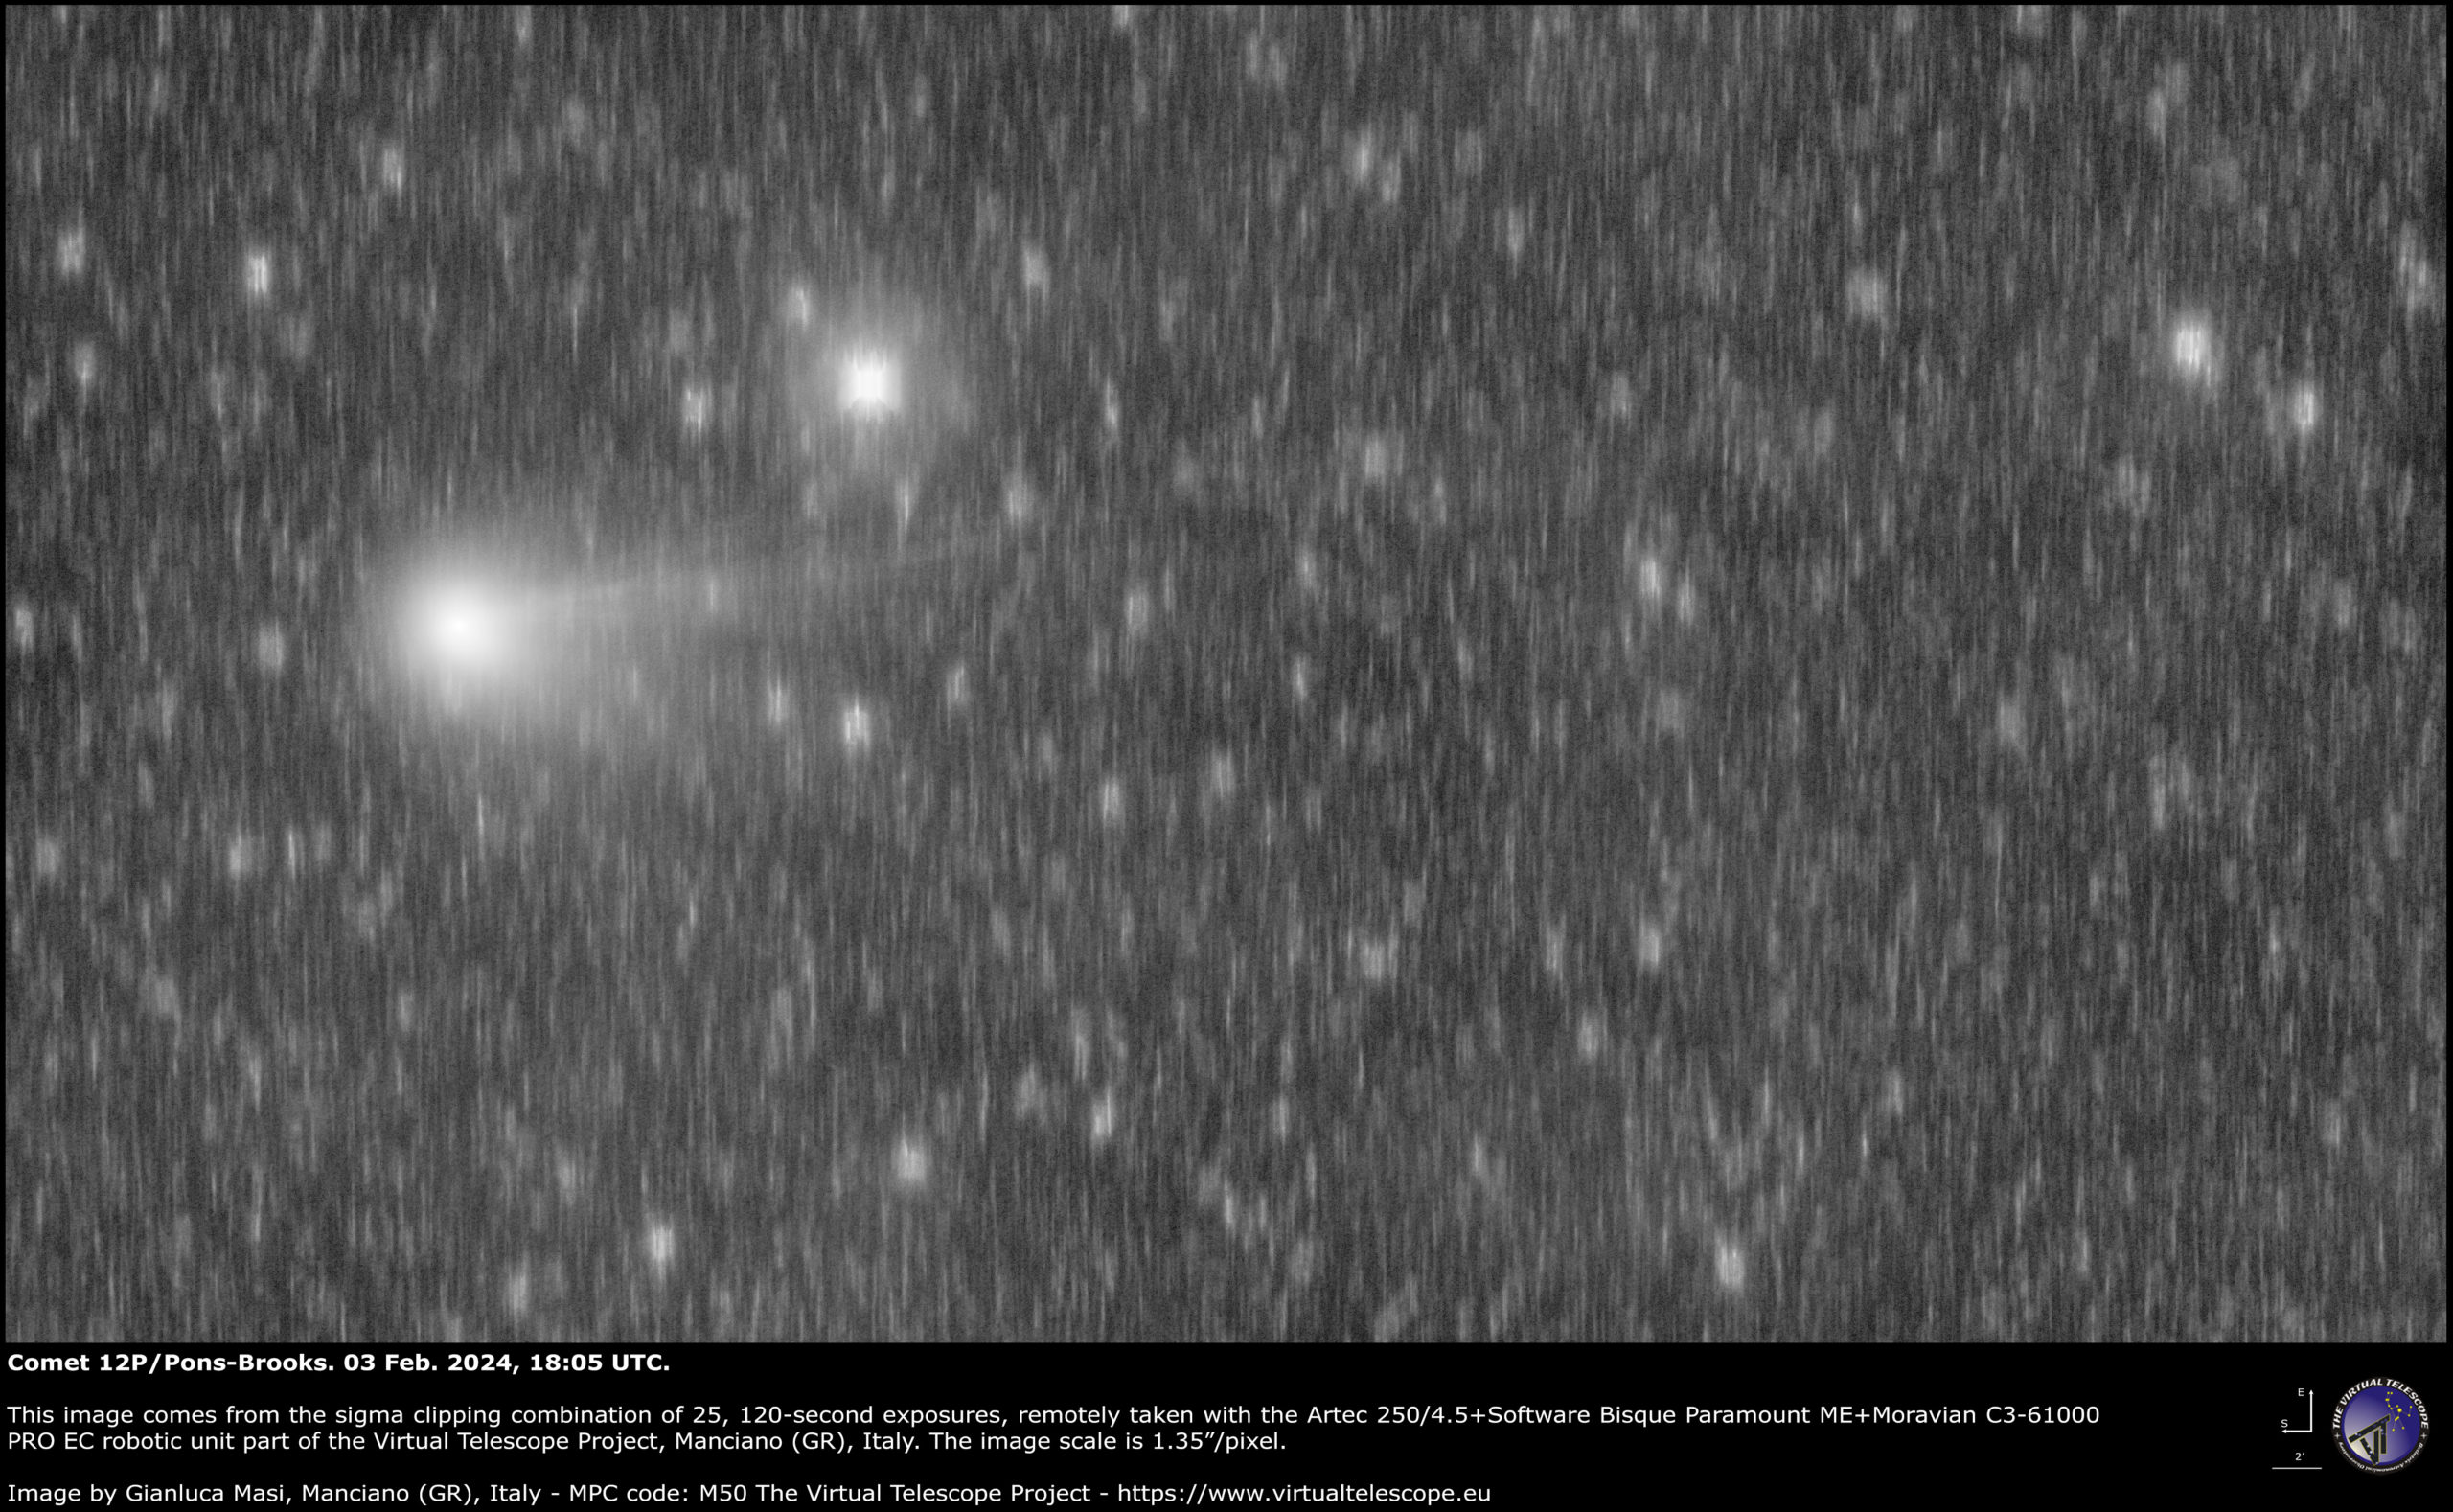 Comet 12P/Pons-Brooks: 3 Feb. 2024.